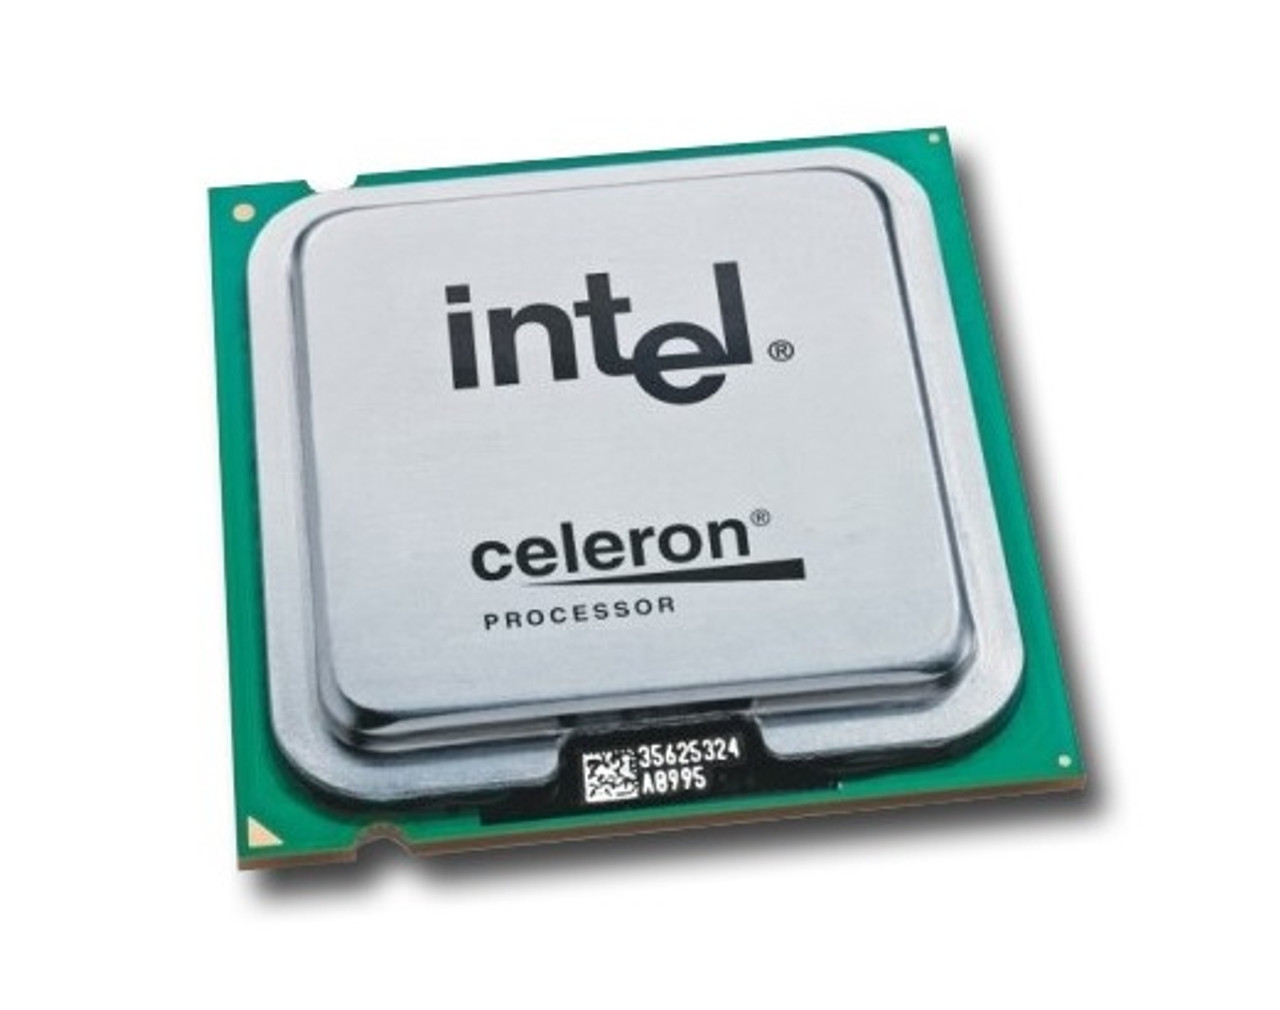 SL4PC - Intel Celeron 566MHz 66MHz FSB 128KB L2 Cache Socket PPGA370 Processor